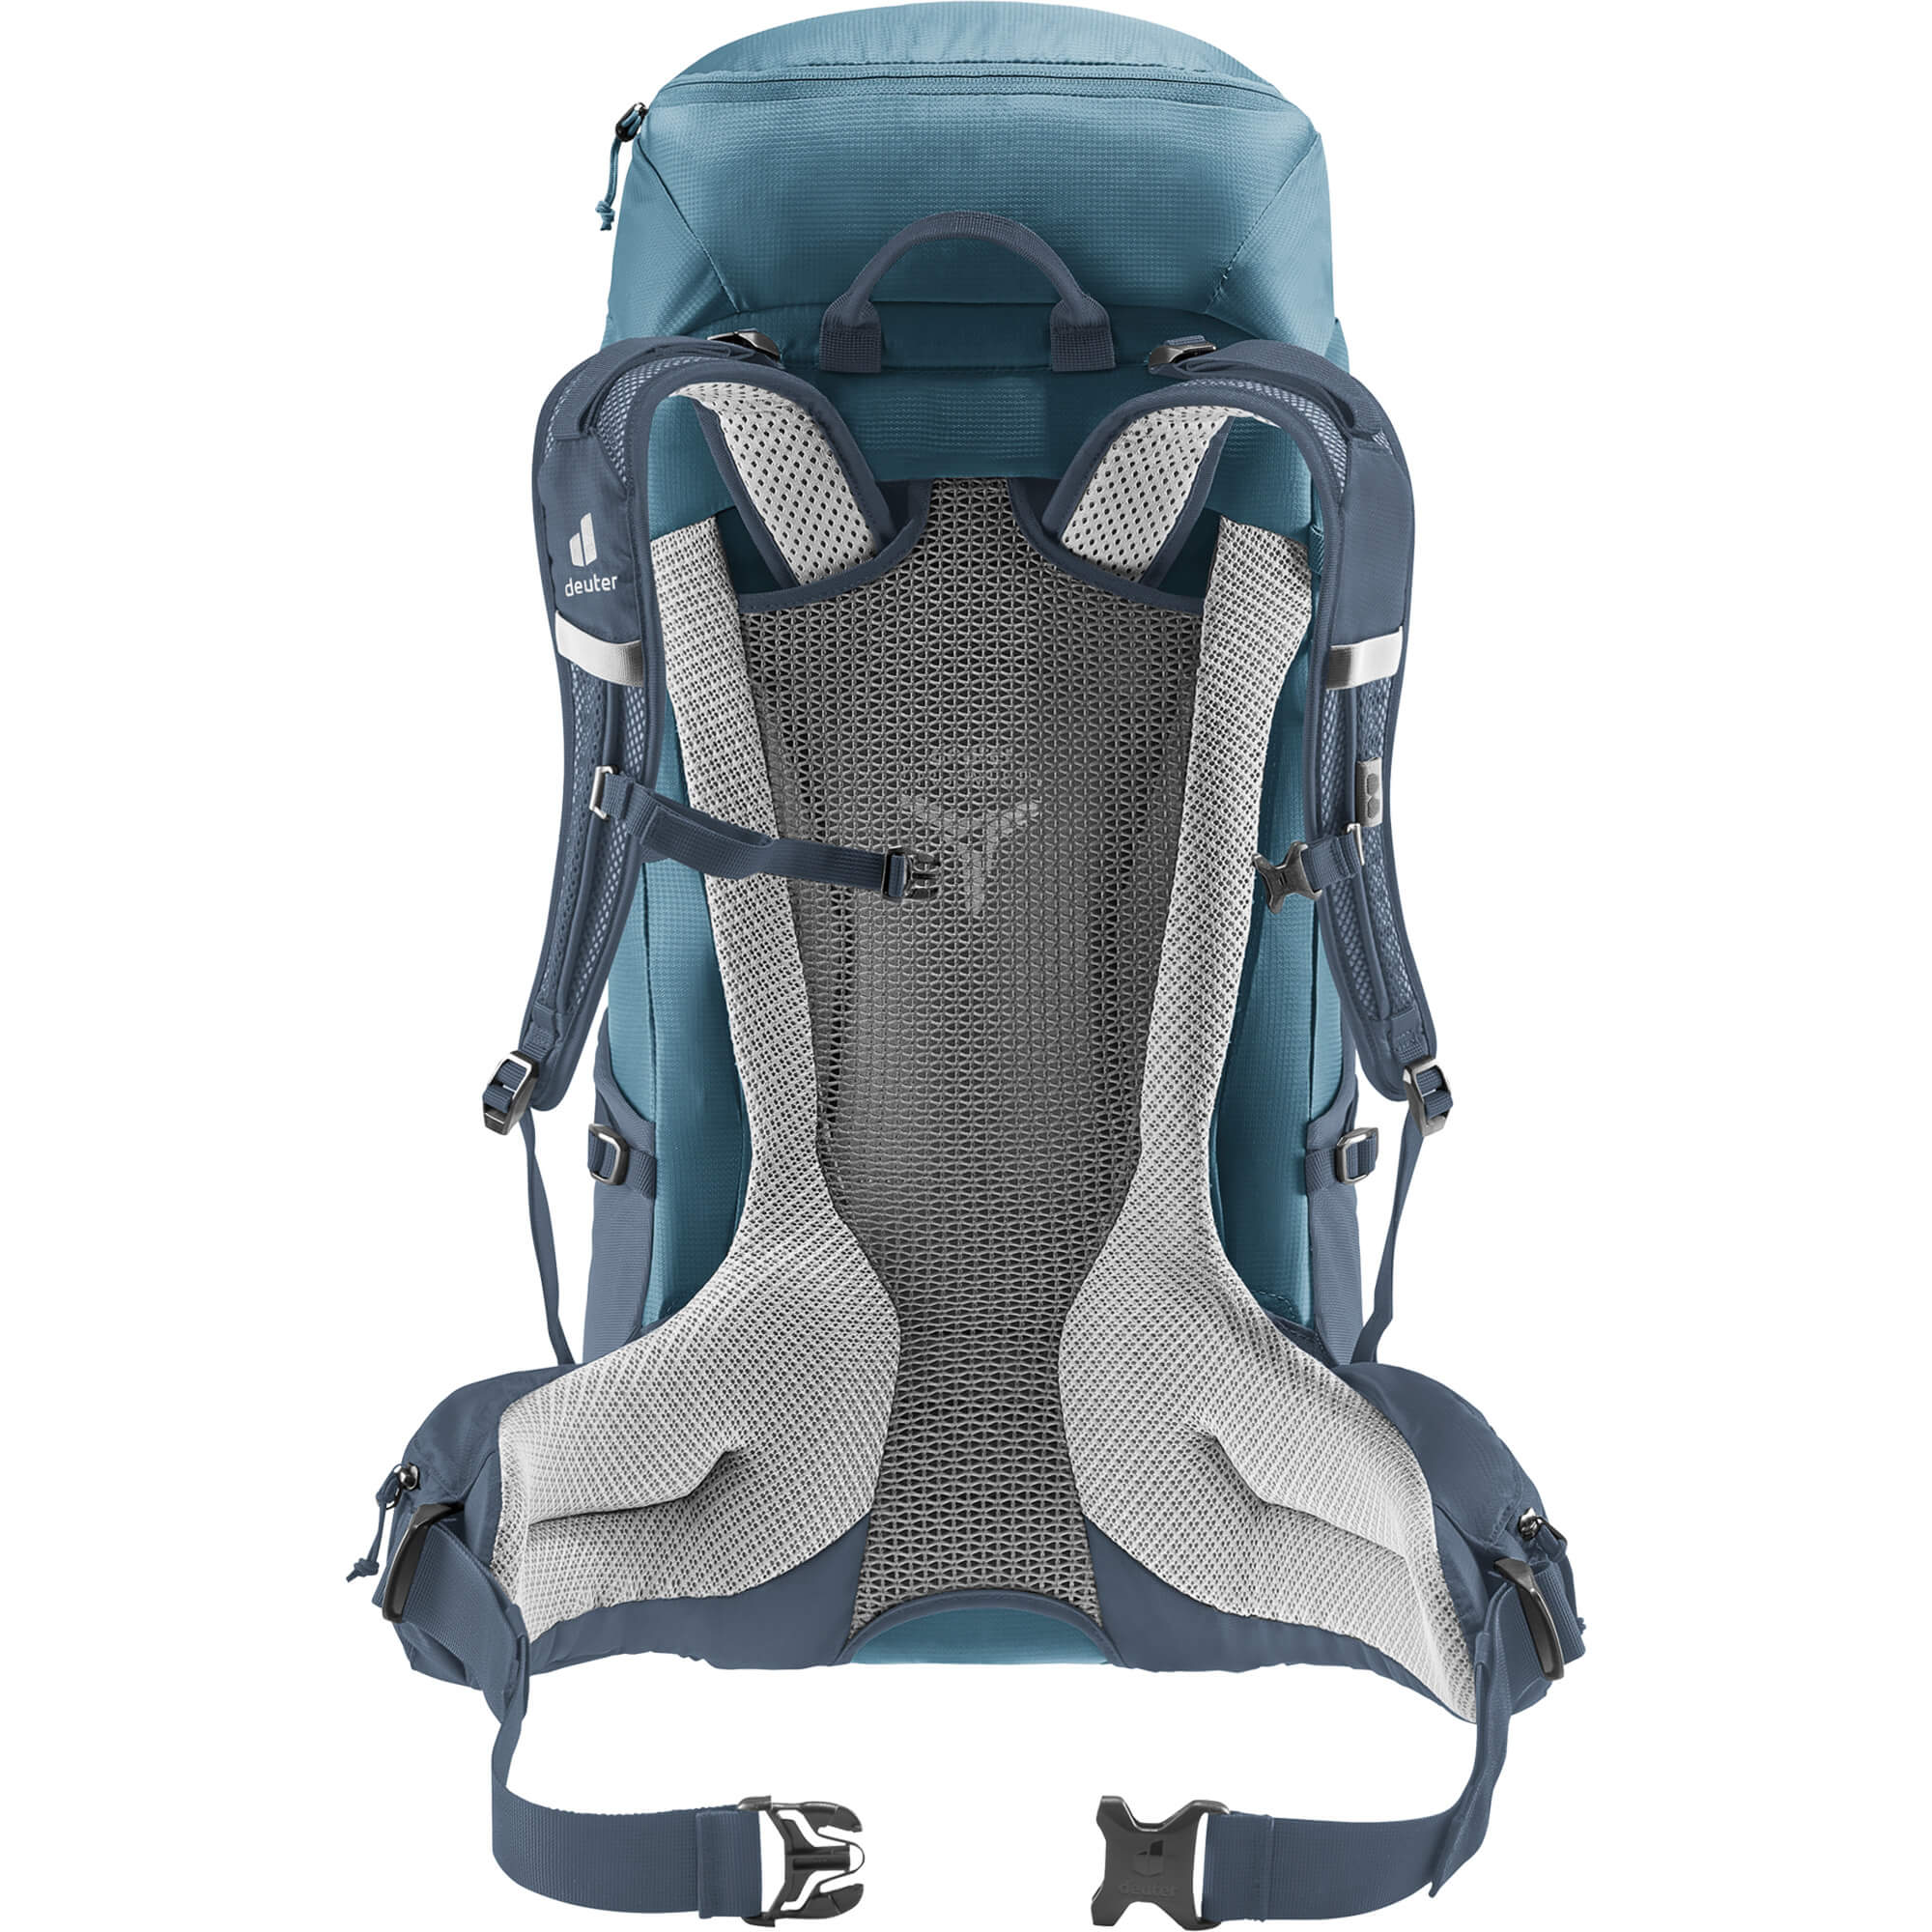 Deuter Futura 32 Daypack/Hiking Backpack